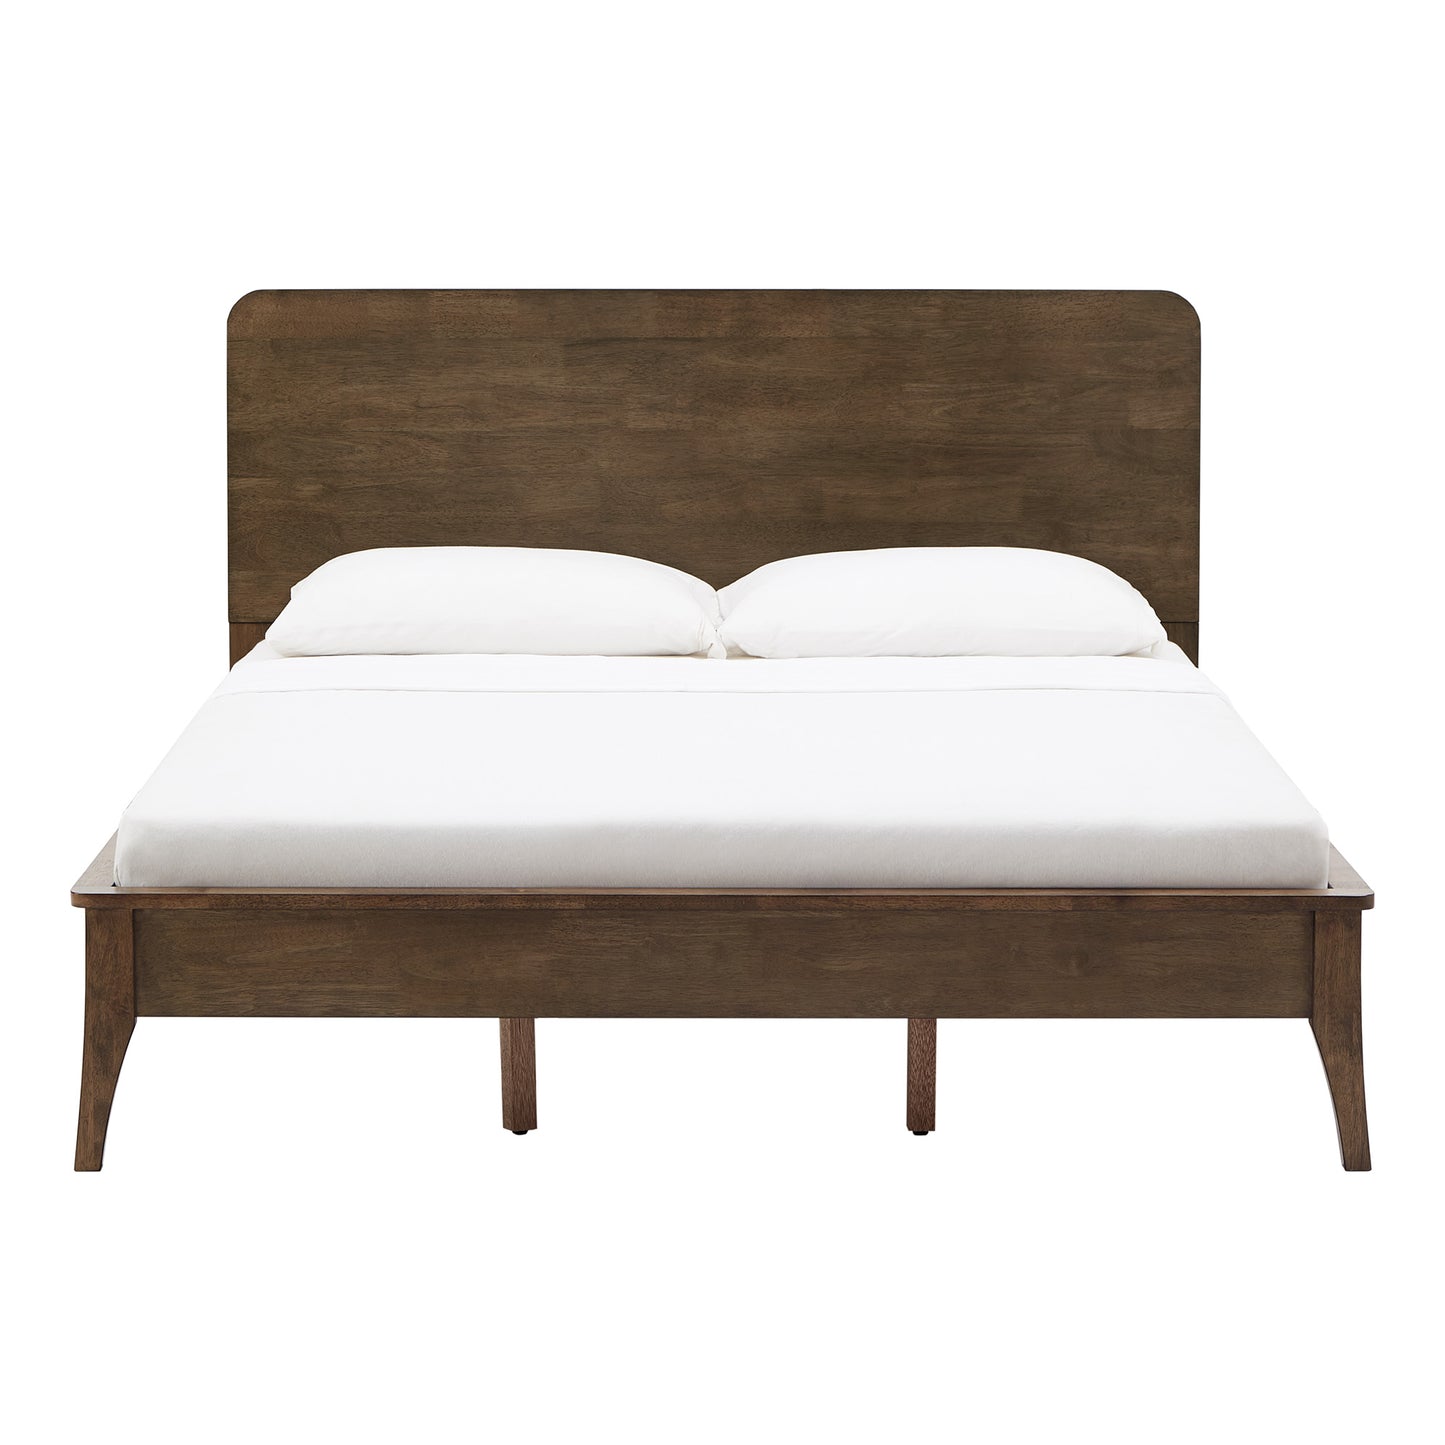 Wood Platform Bed - Walnut Finish, Queen Size